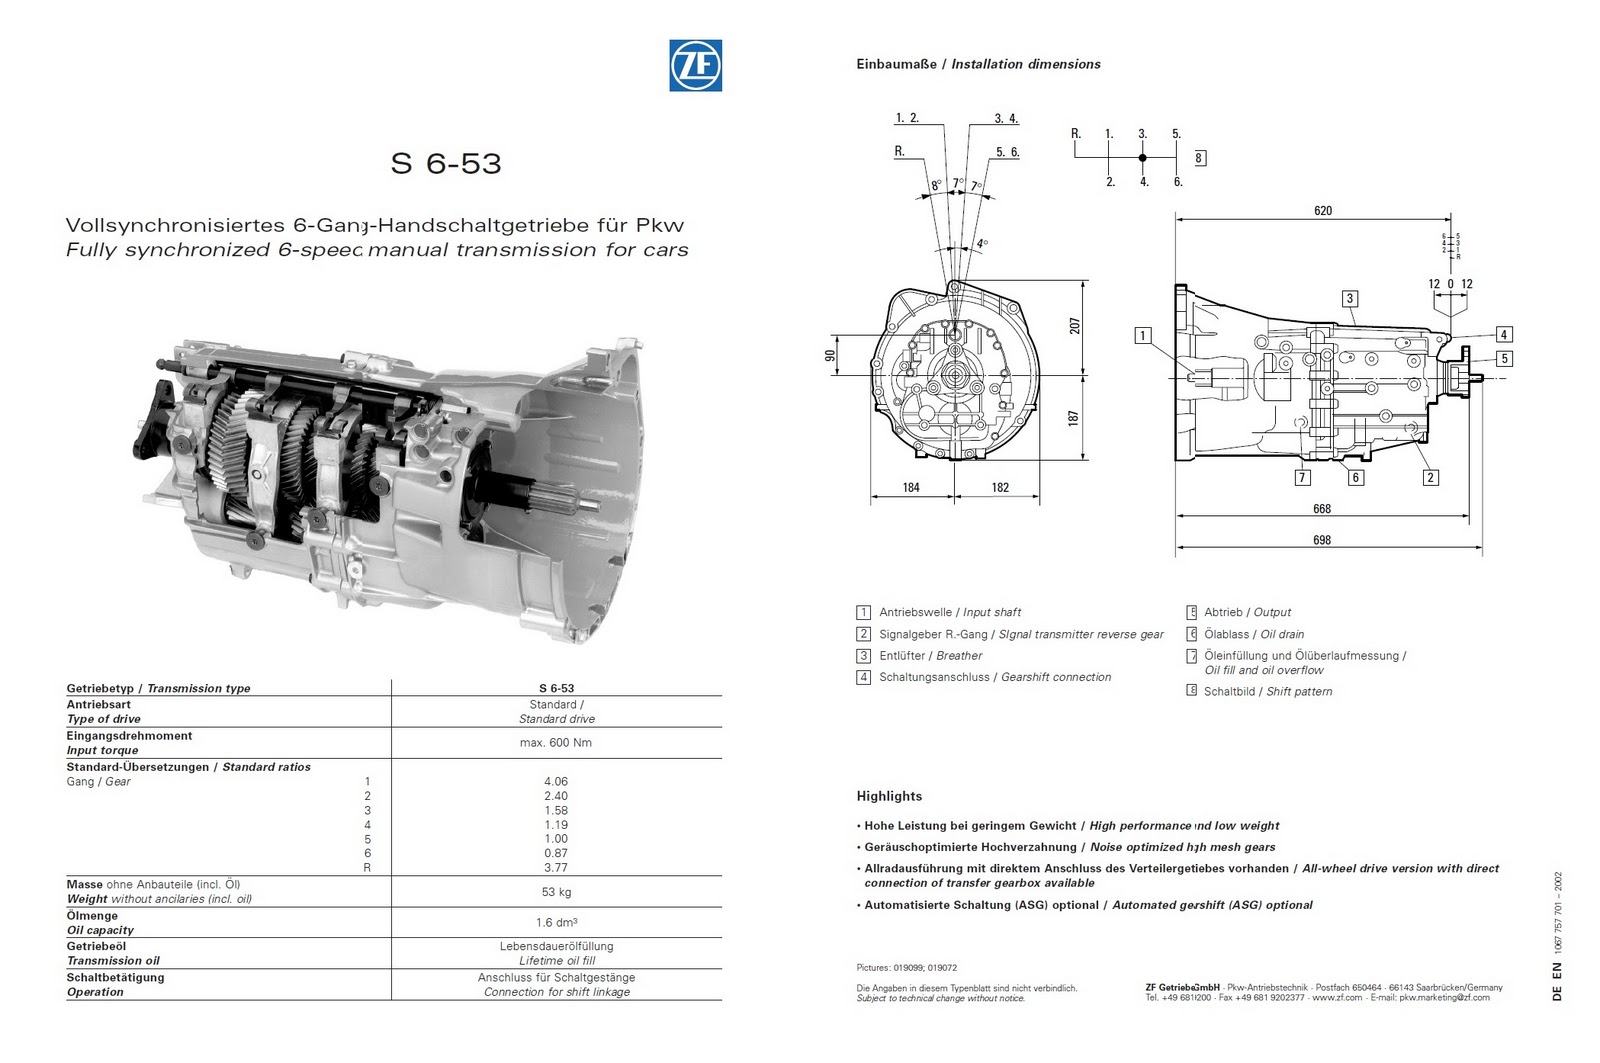 W201 M111 Kompressor + Turbo - Page 25 -